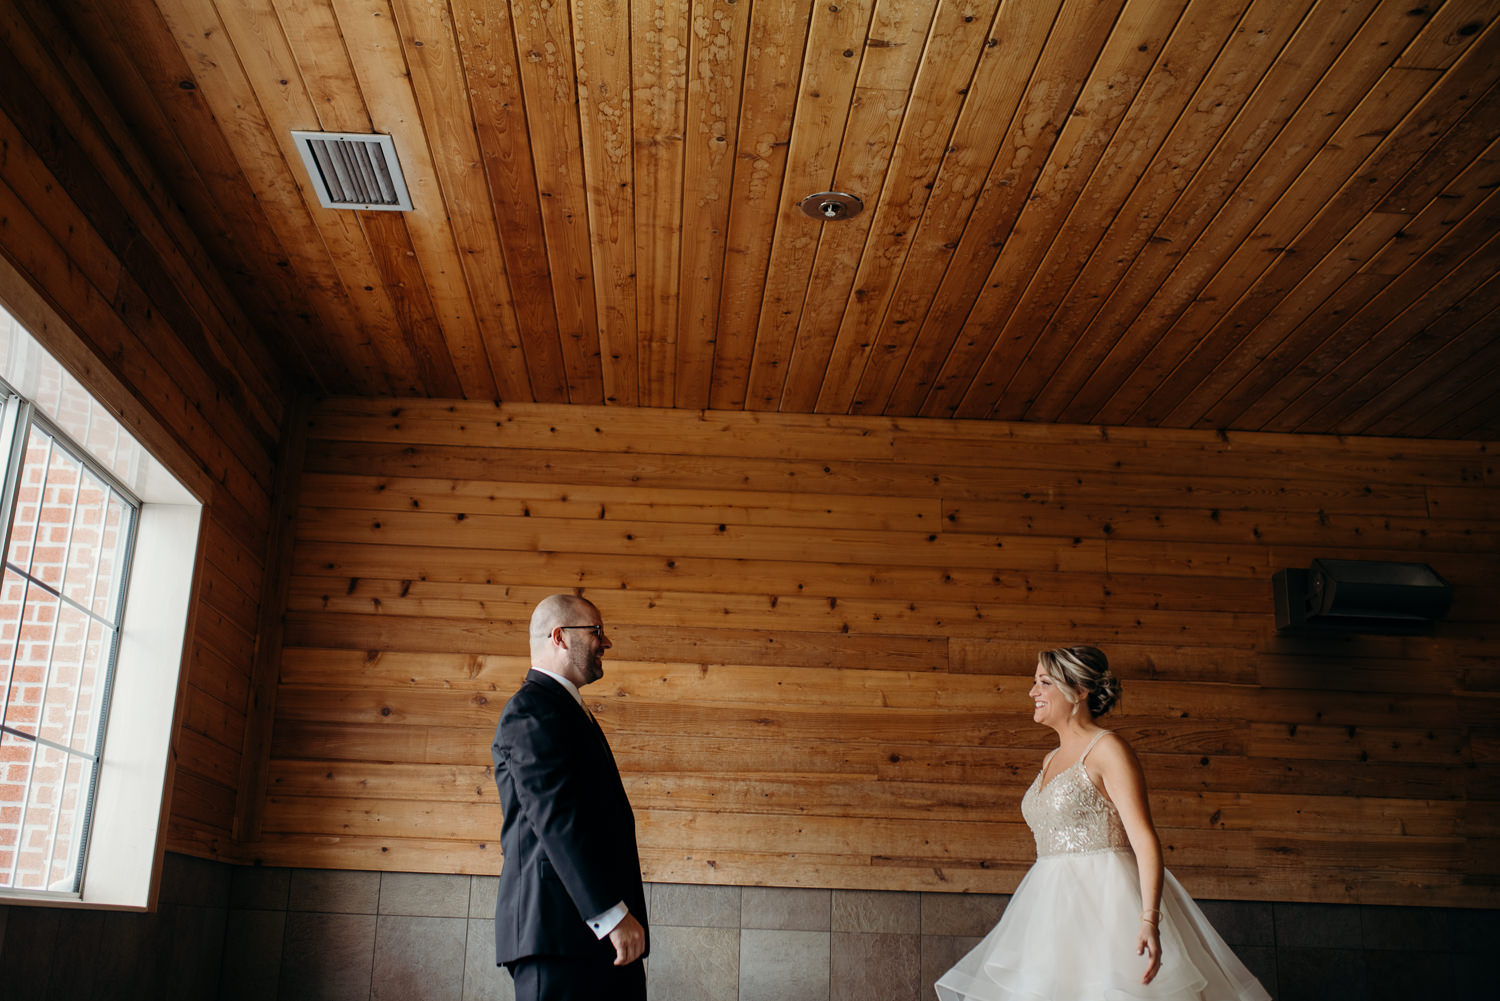 Grant Beachy wedding portrait commercial photographer goshen elkhart south bend warsaw-2651.jpg